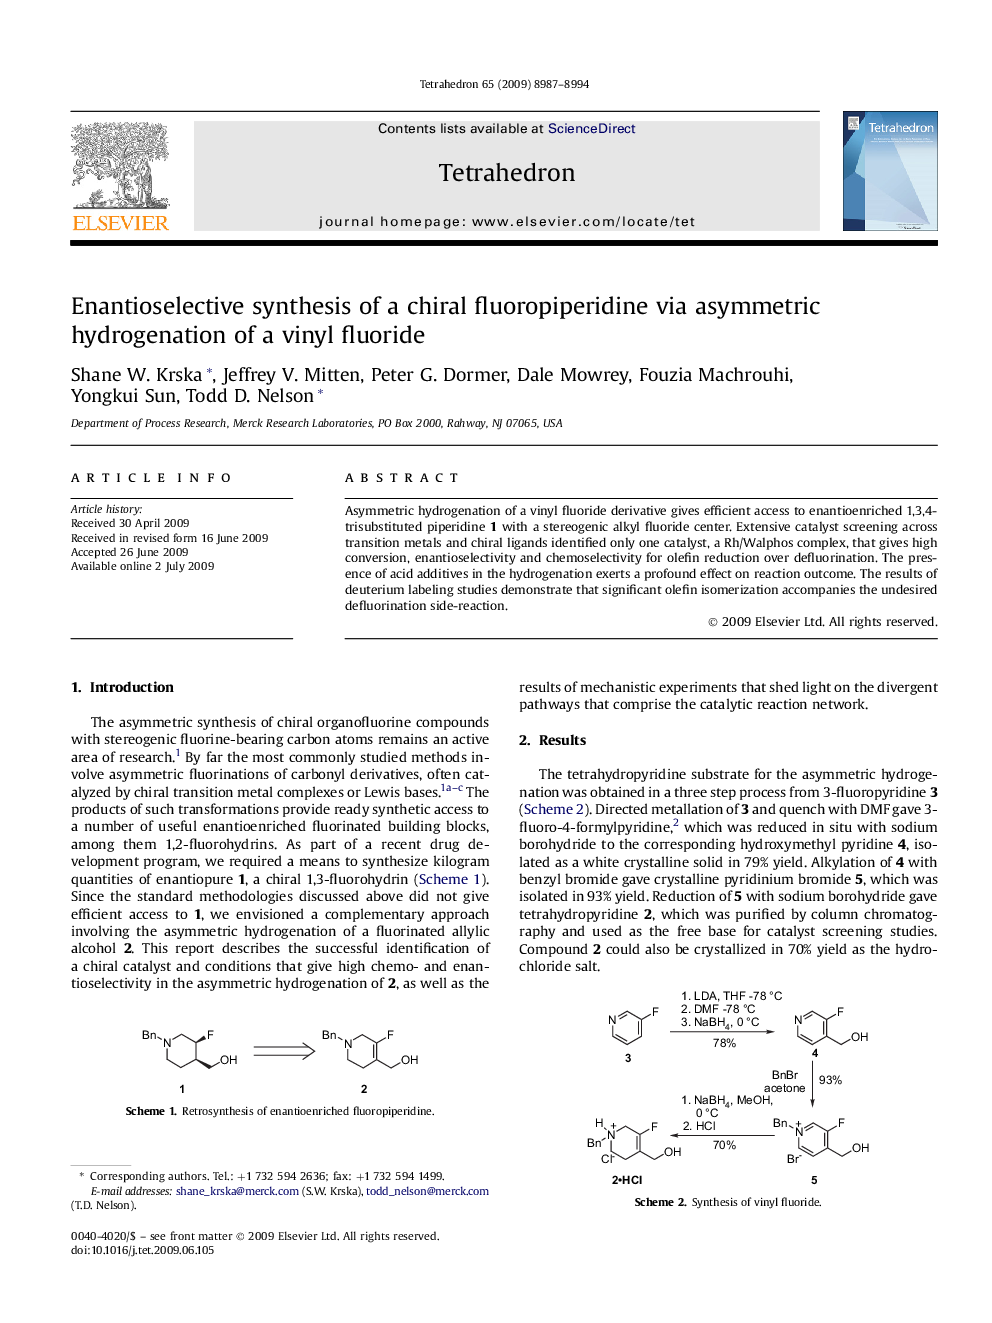 Enantioselective synthesis of a chiral fluoropiperidine via asymmetric hydrogenation of a vinyl fluoride